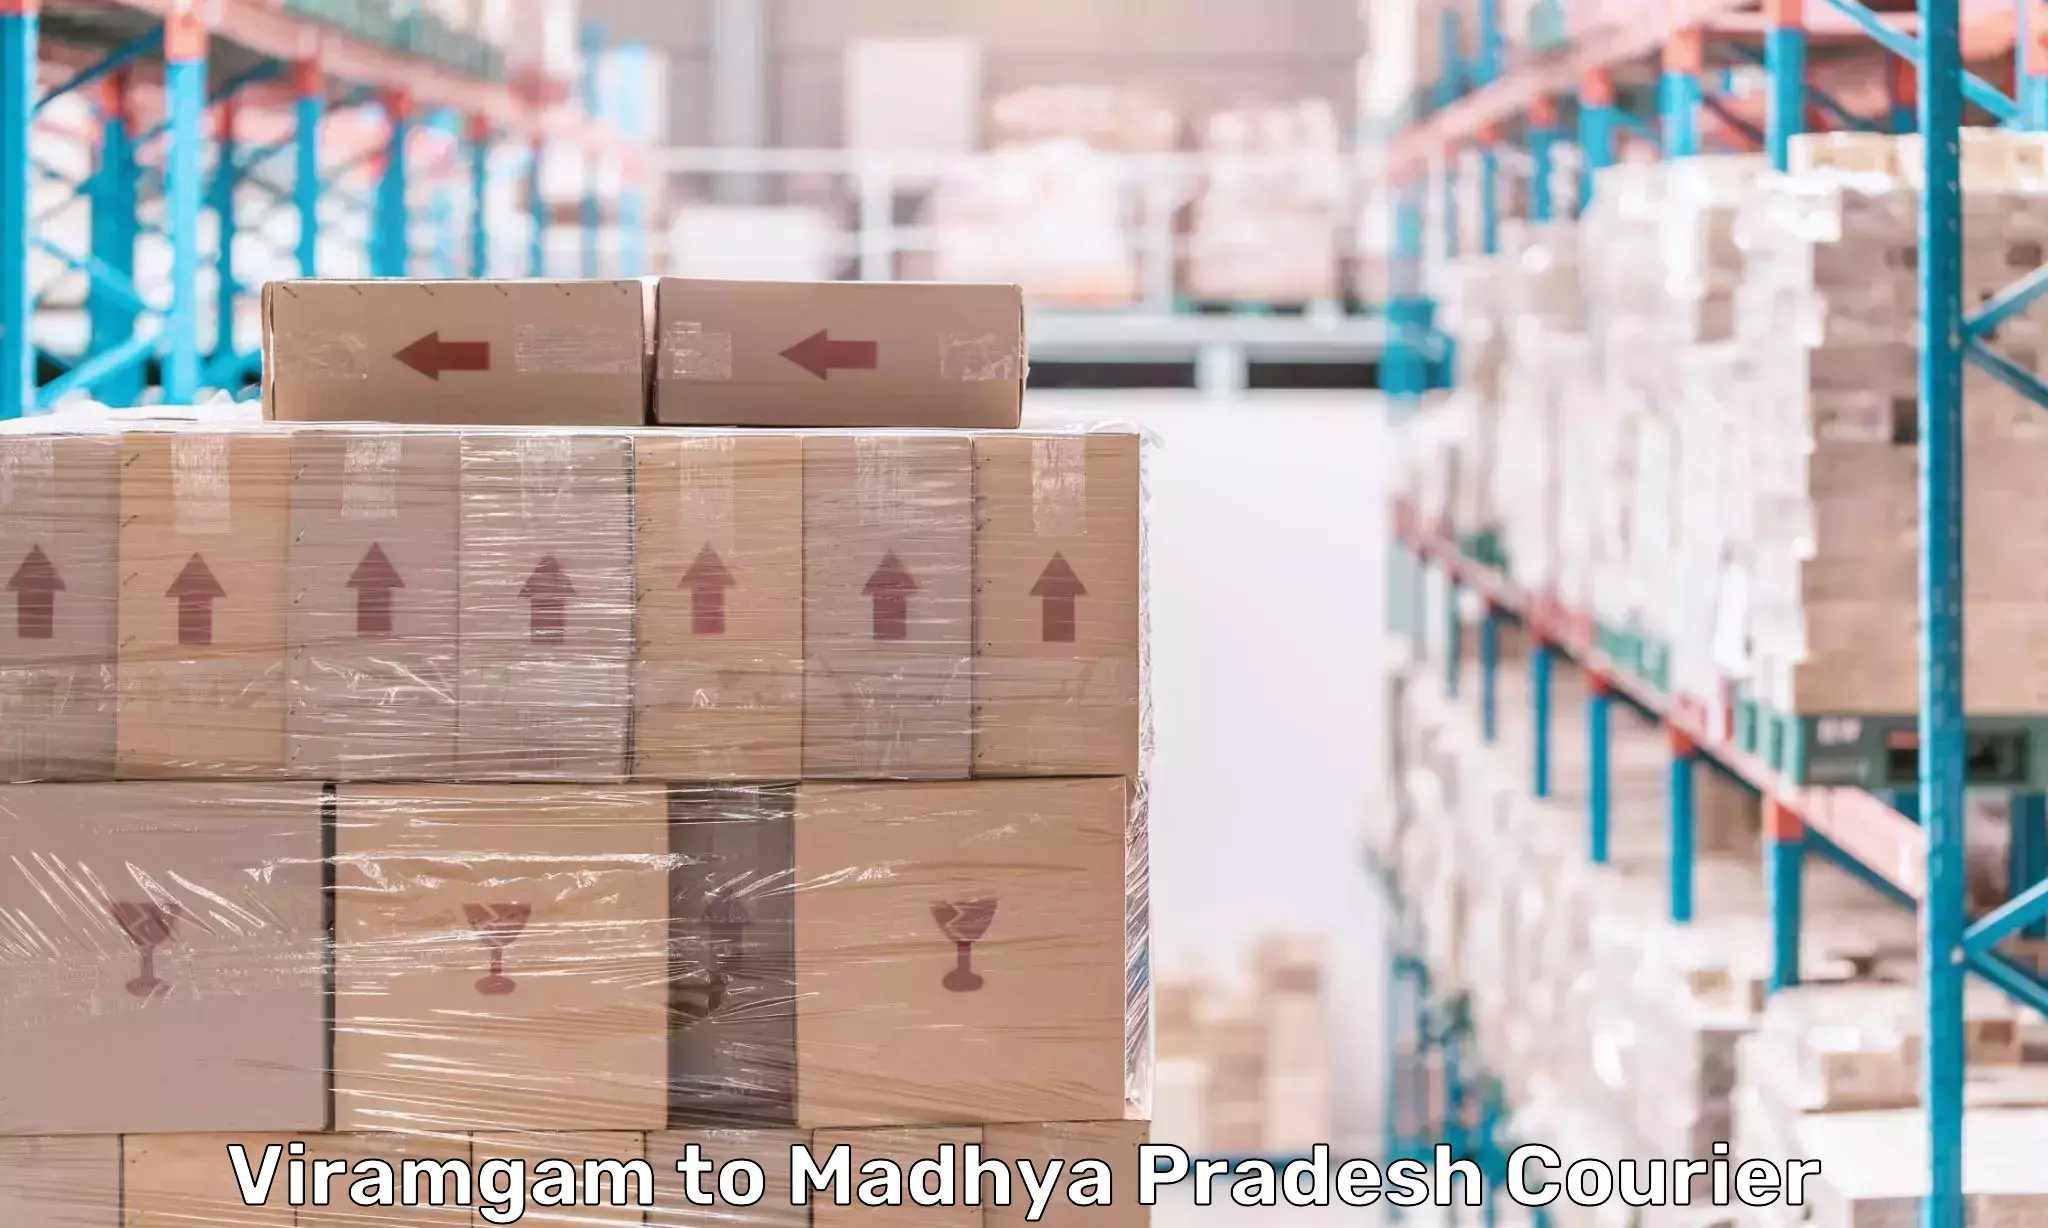 State-of-the-art courier technology Viramgam to Madhya Pradesh